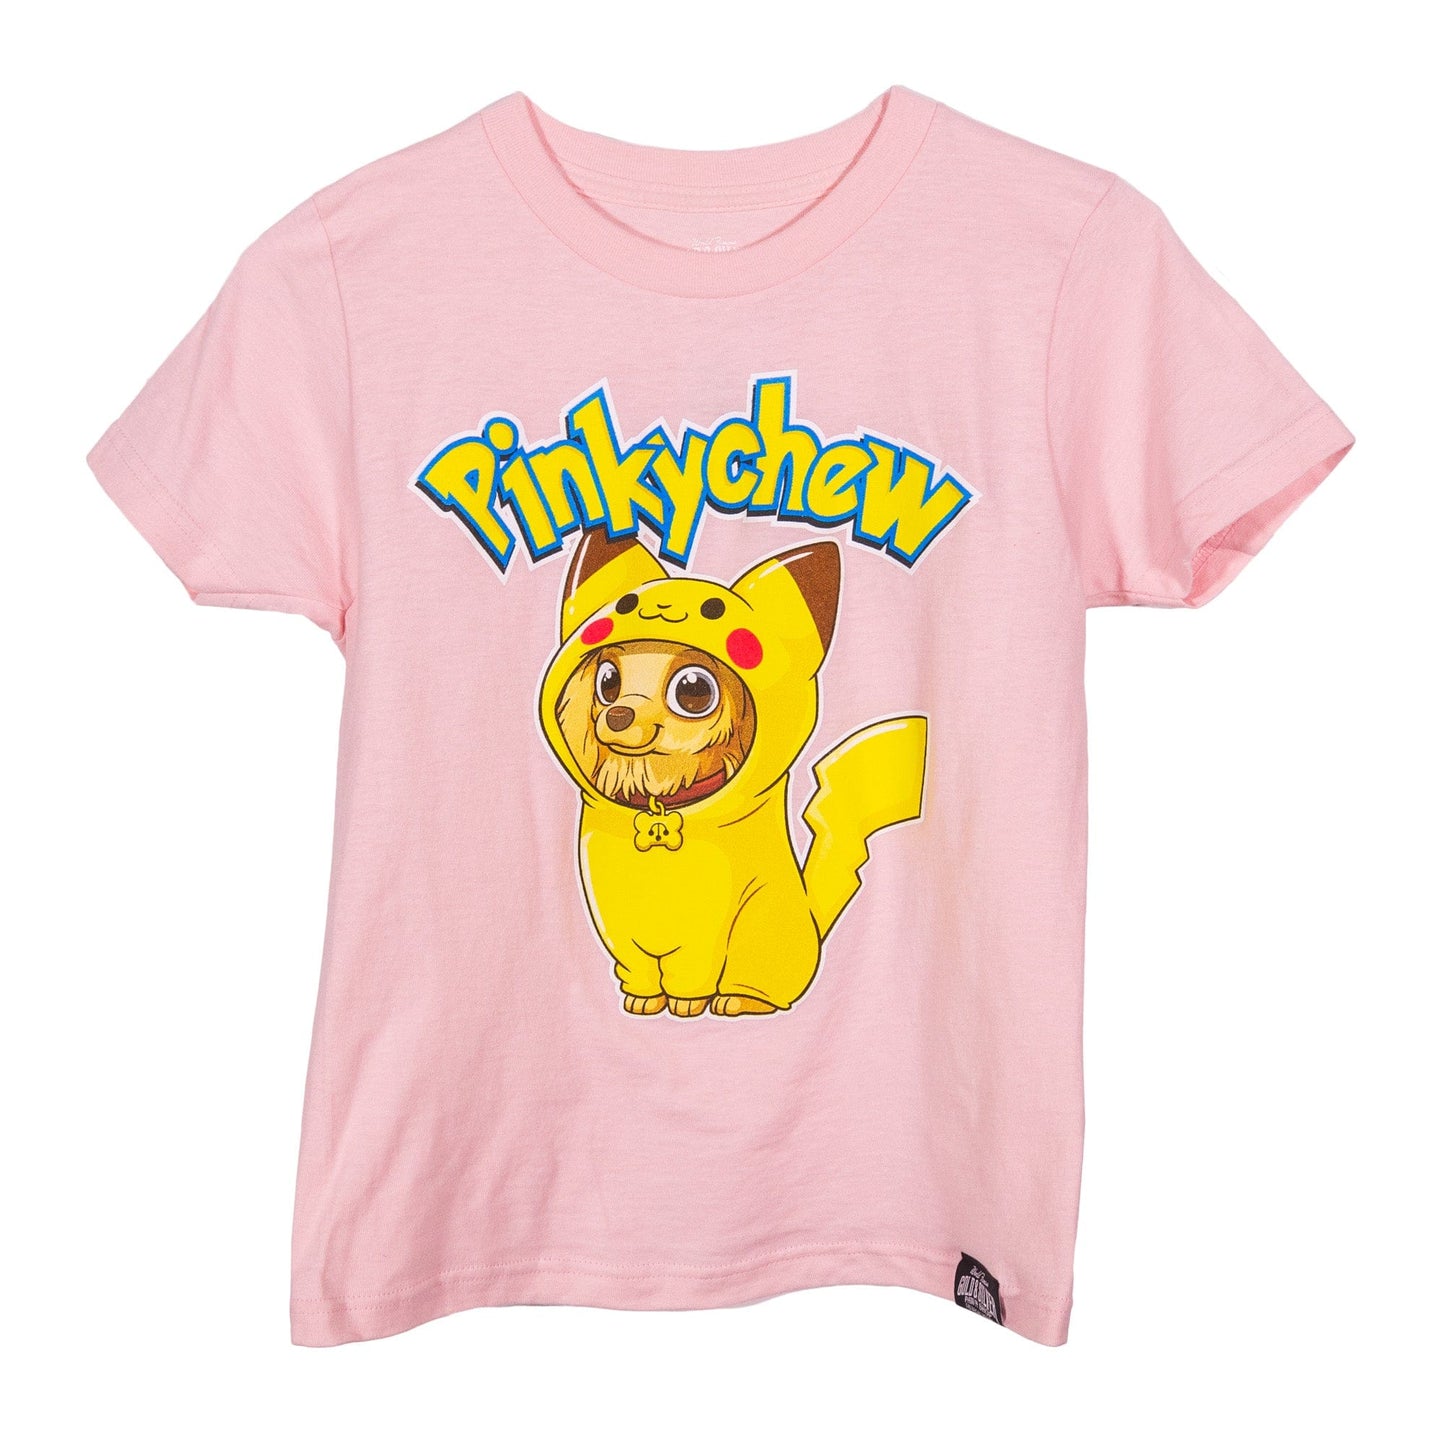 Kids "Pinkychew" T-Shirt Pastel Pink